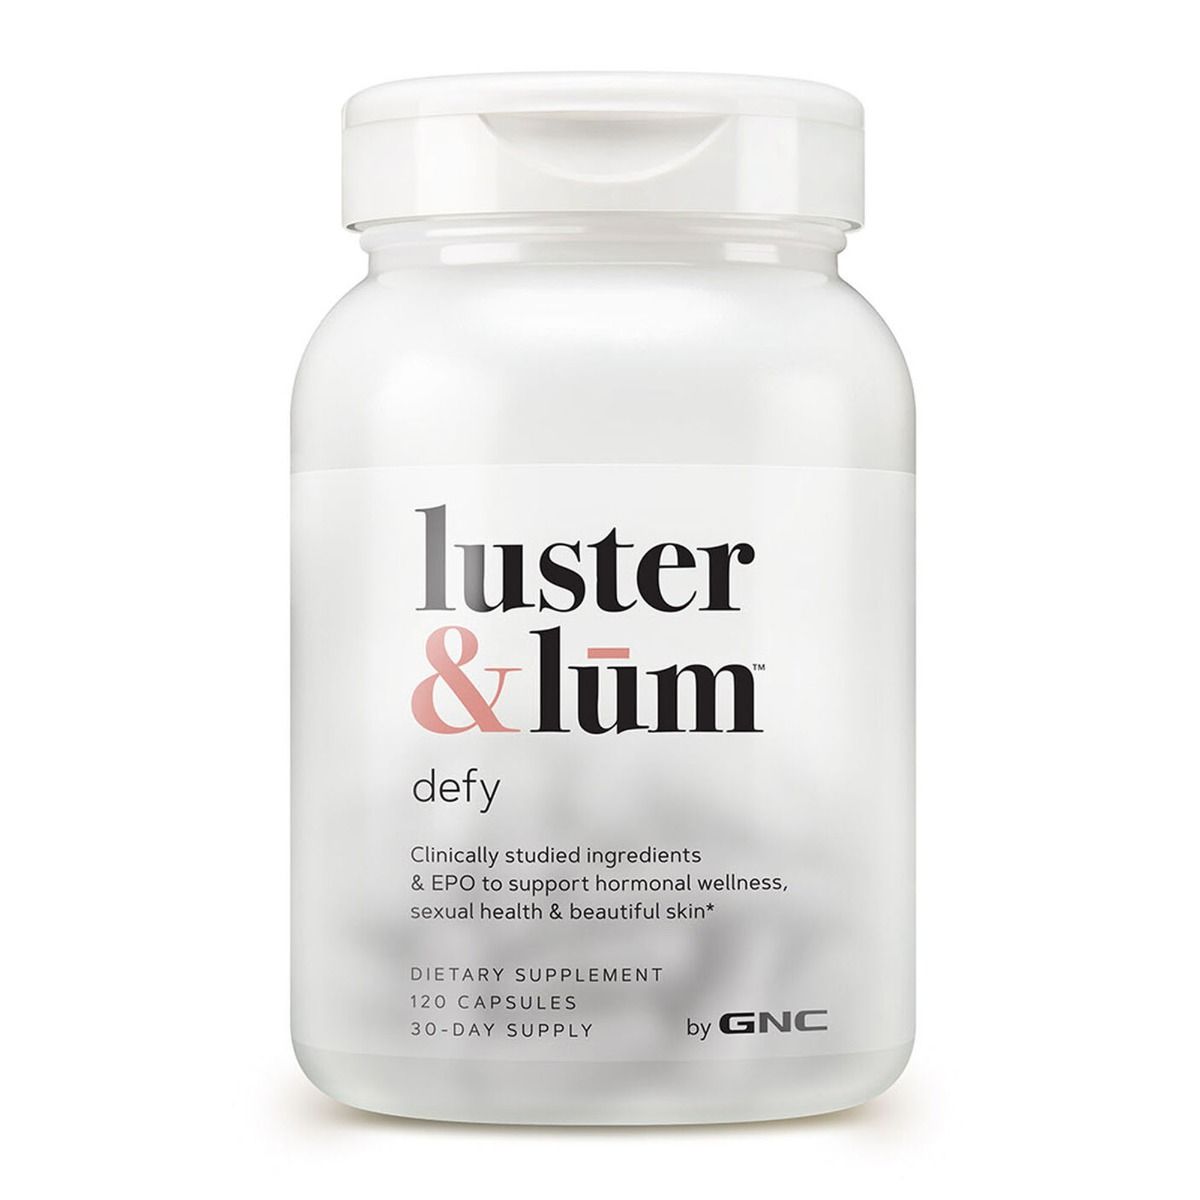 luster and lum Defy - 